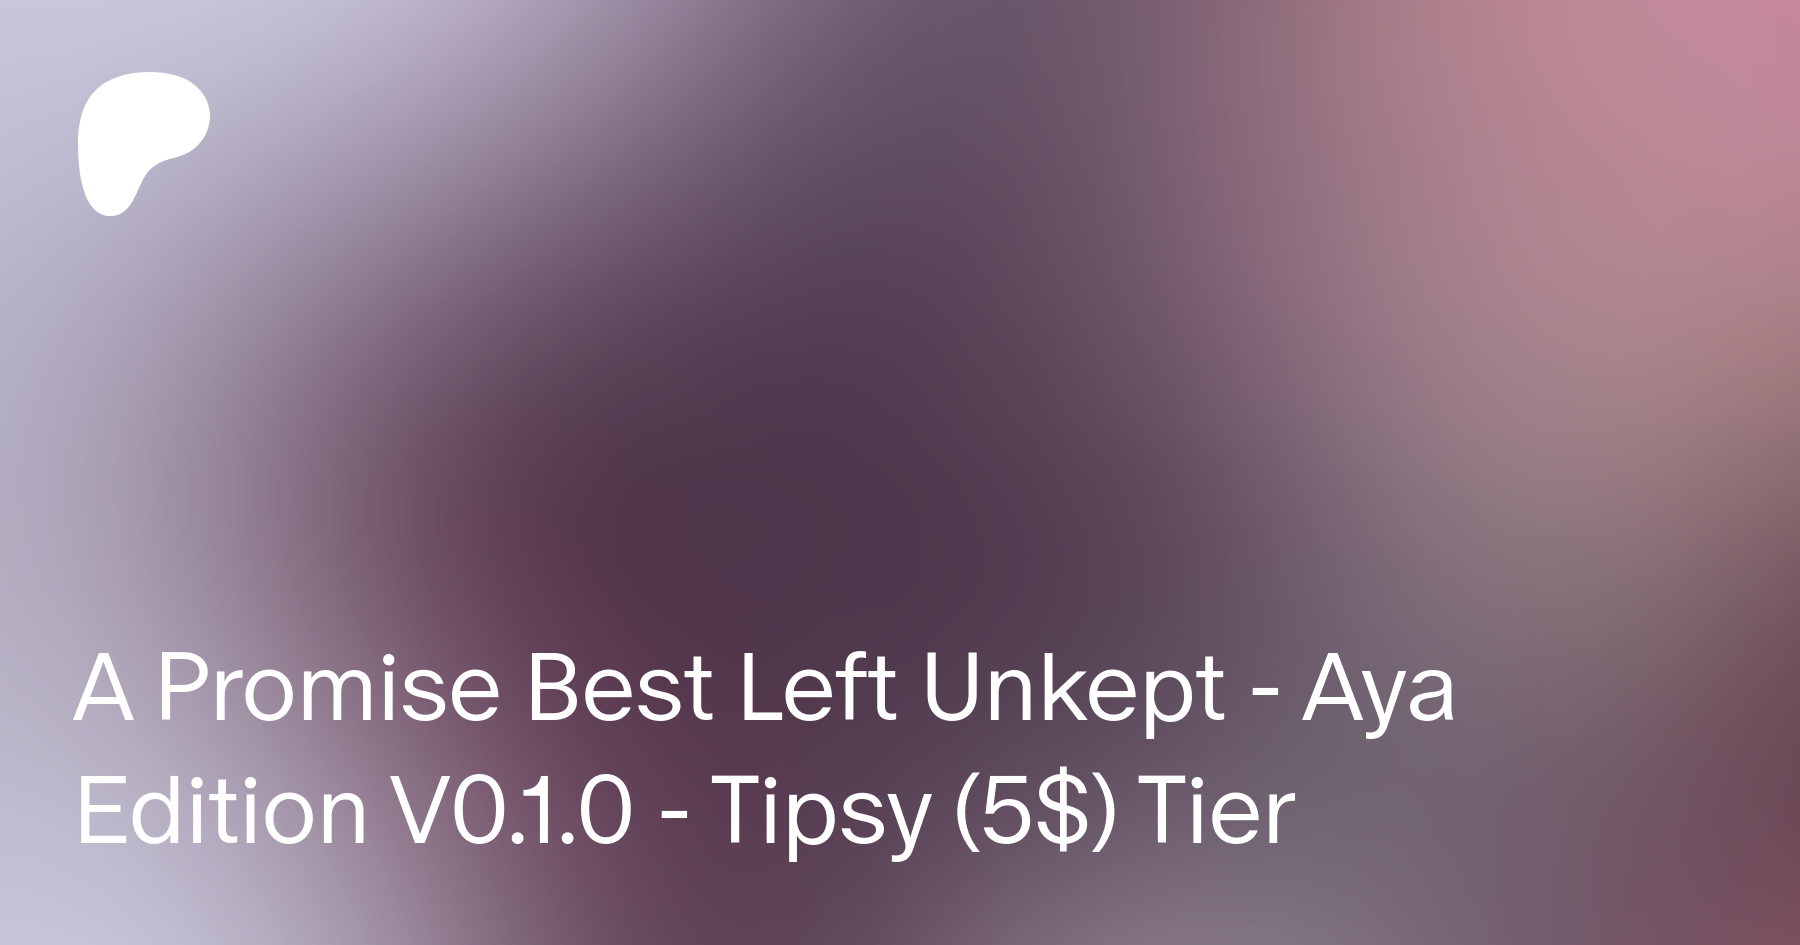 A Promise Best Left Unkept - Aya Edition V0.1.0 - Tipsy (5$) Tier | Patreon